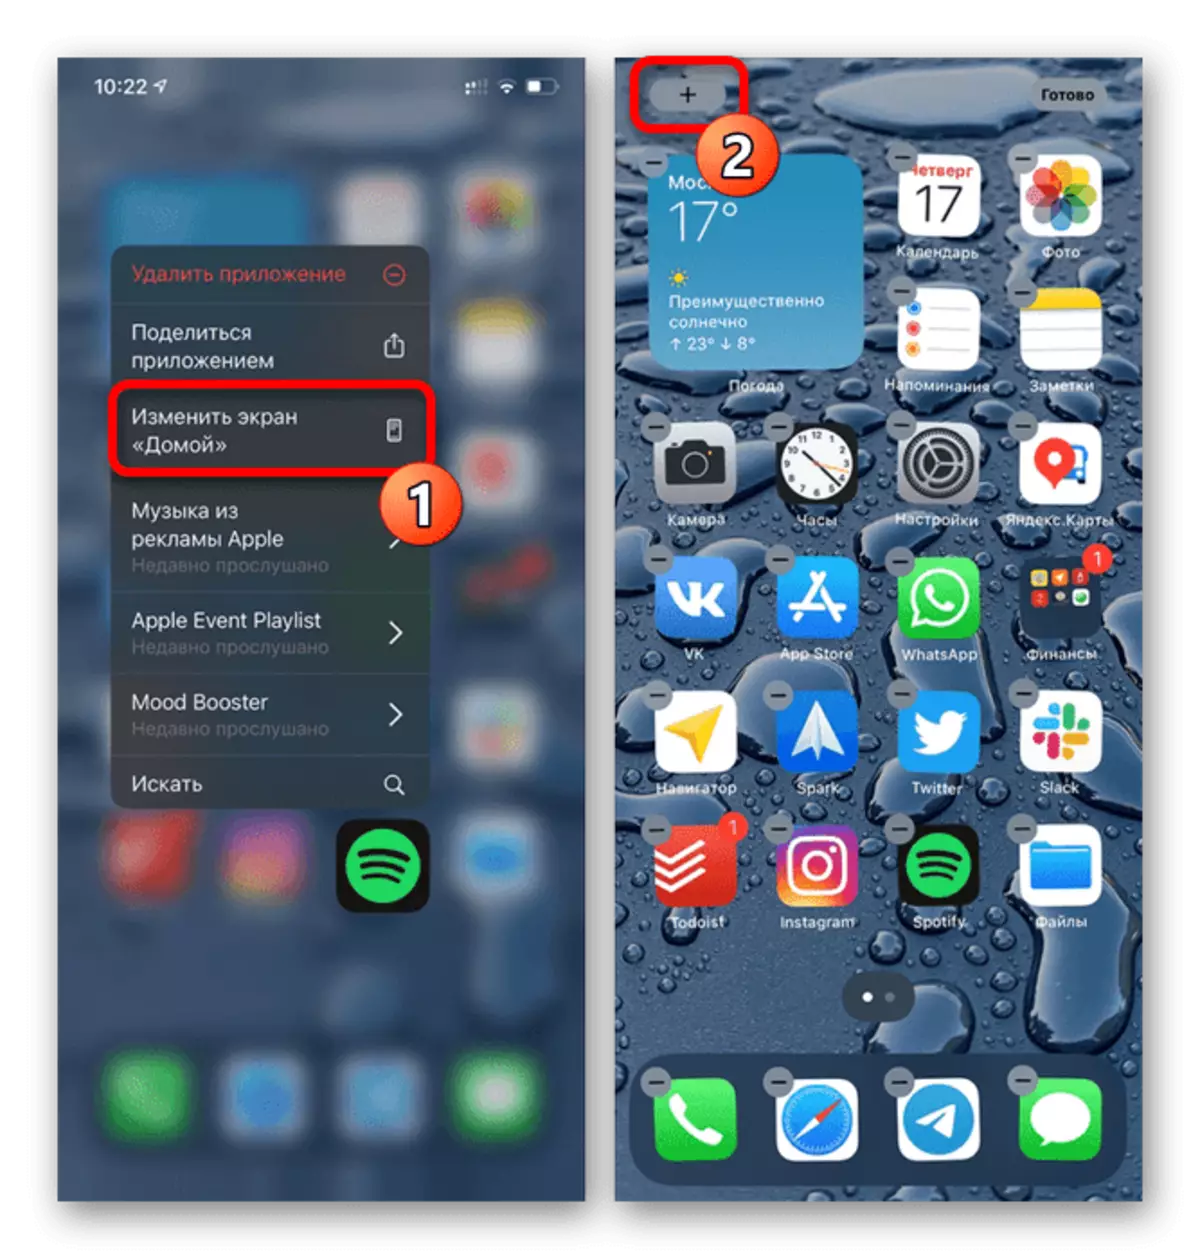 Vai a cambiare la schermata principale sul dispositivo iOS